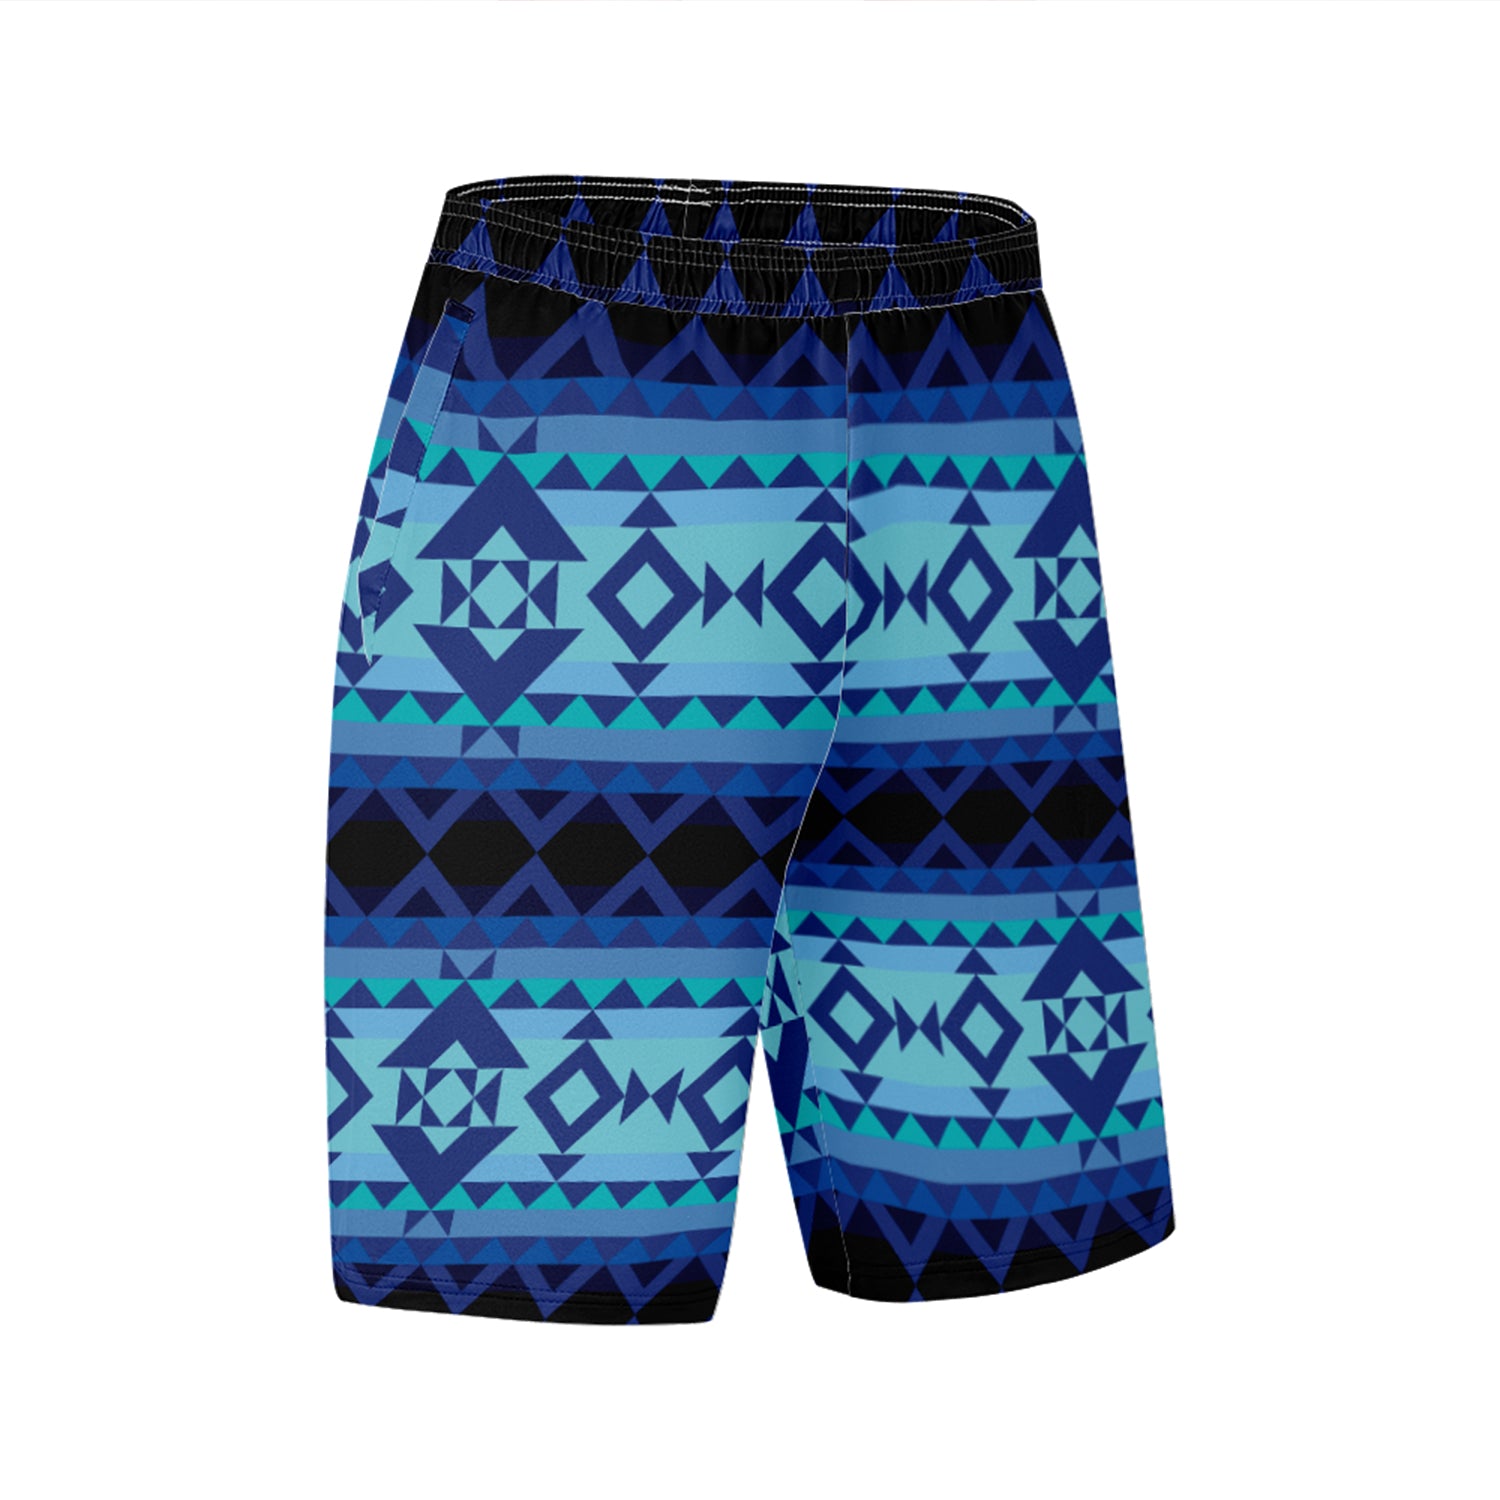 Tipi Athletic Shorts with Pockets